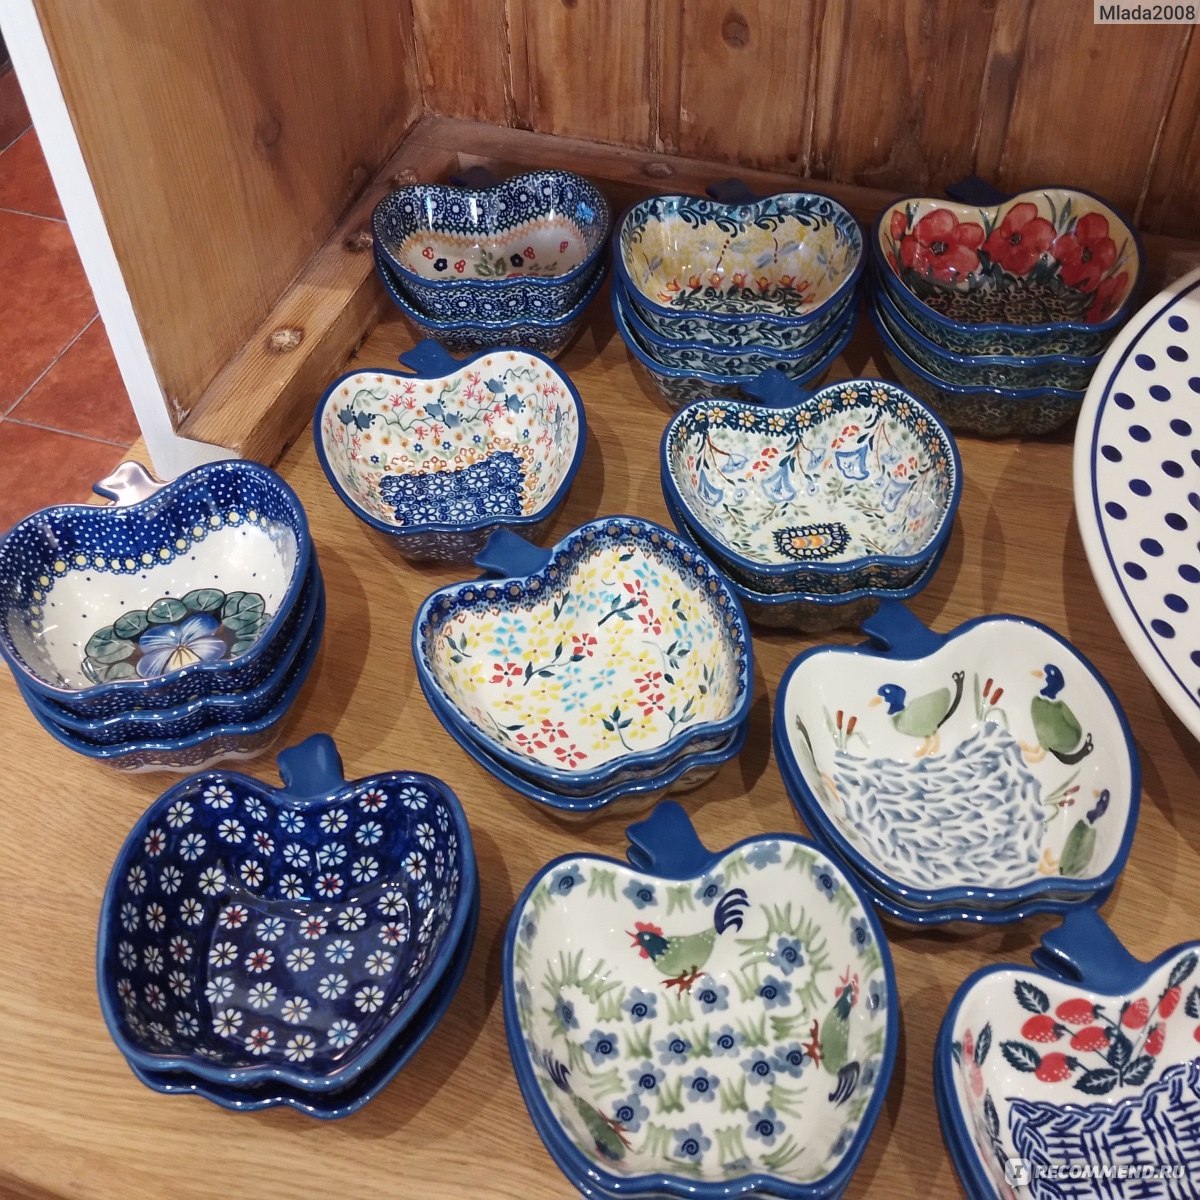 Посуда синица. Болеславская керамика птица синица. Польская керамика птица синица. Птица синица посуда из керамики. Синяя птица посуда из керамики Польша.